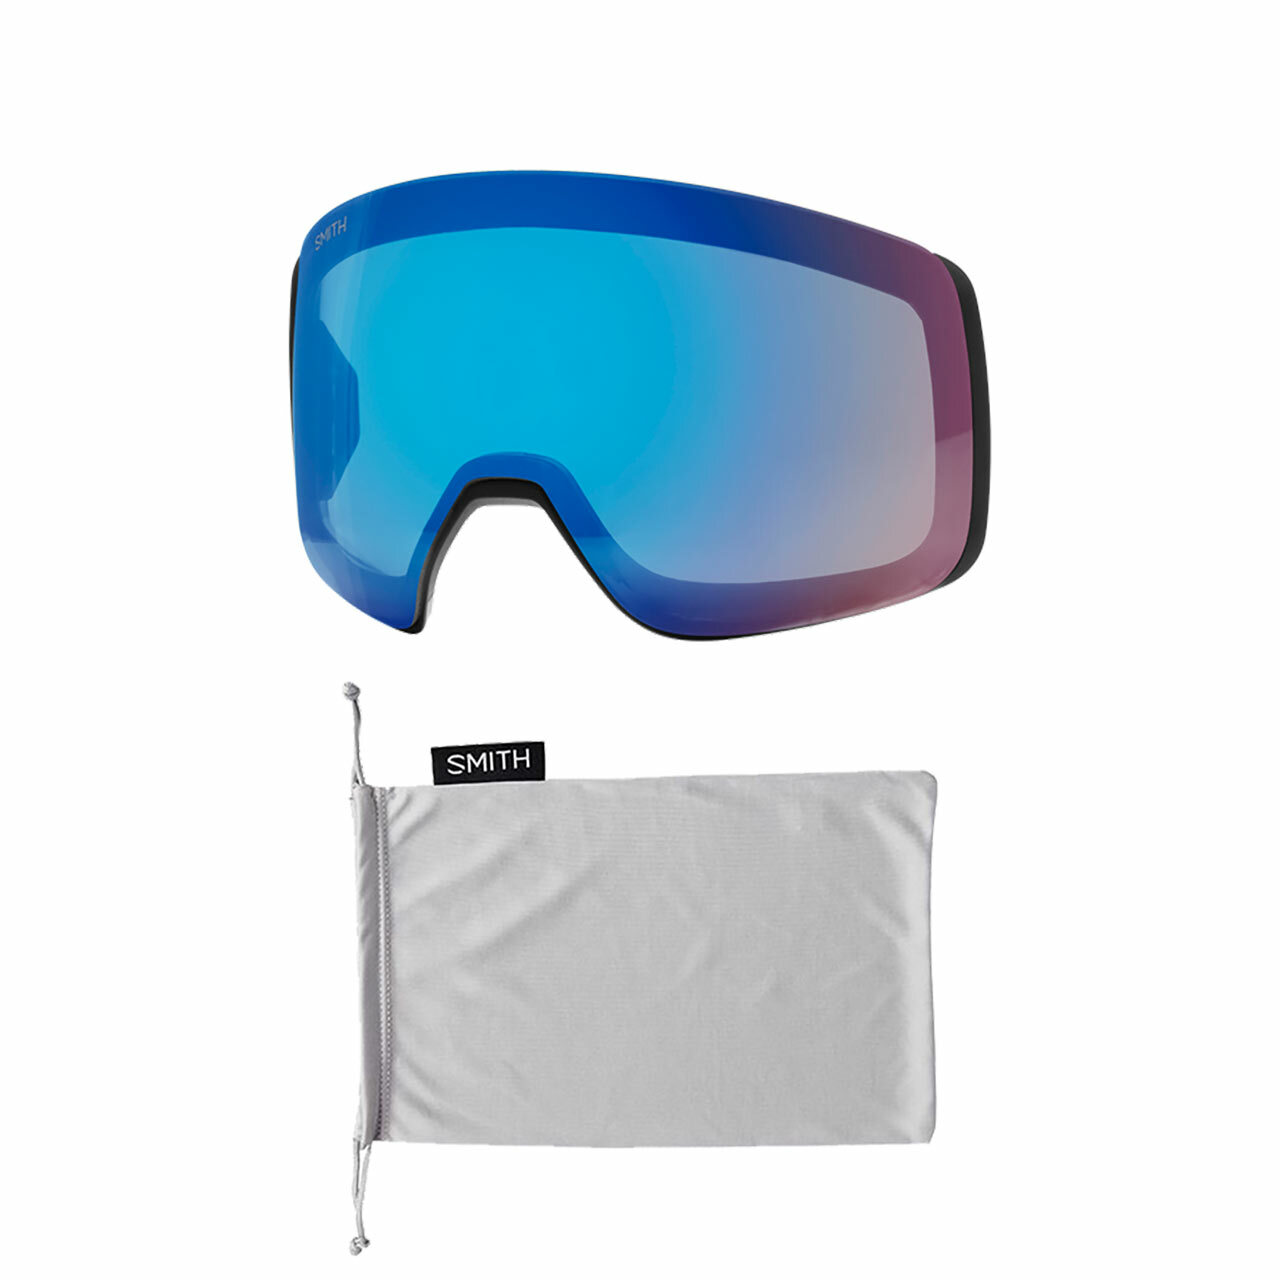 Smith 4D MAG ChromaPop Ski Goggles | Campman